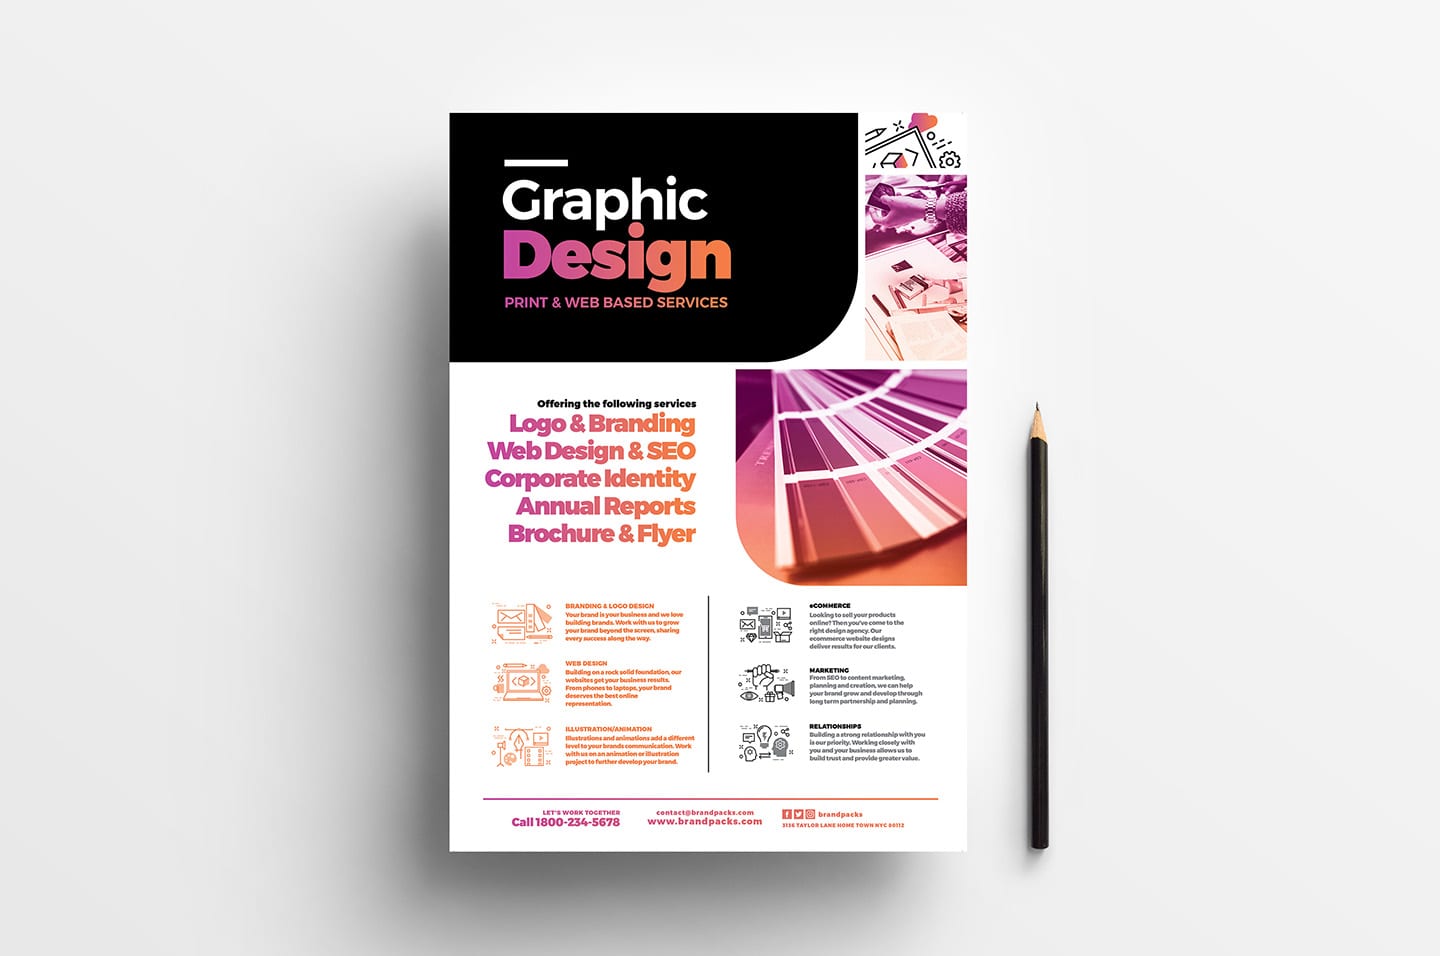 Graphic Design Poster Template